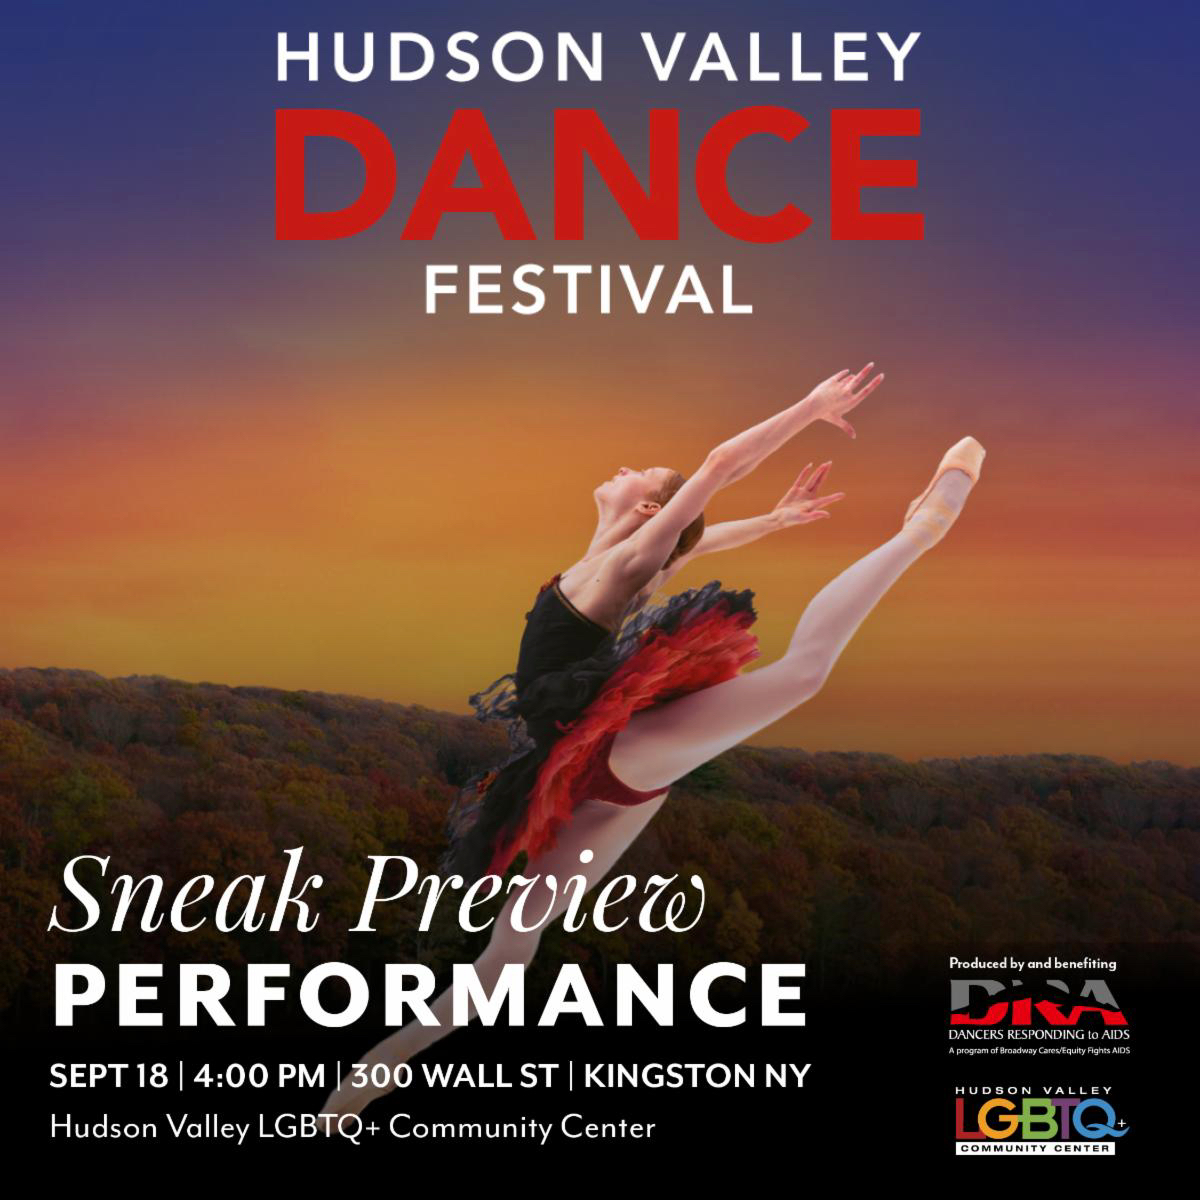 Hudson Valley Dance Festival (Sneak Preview Performance) Big Gay